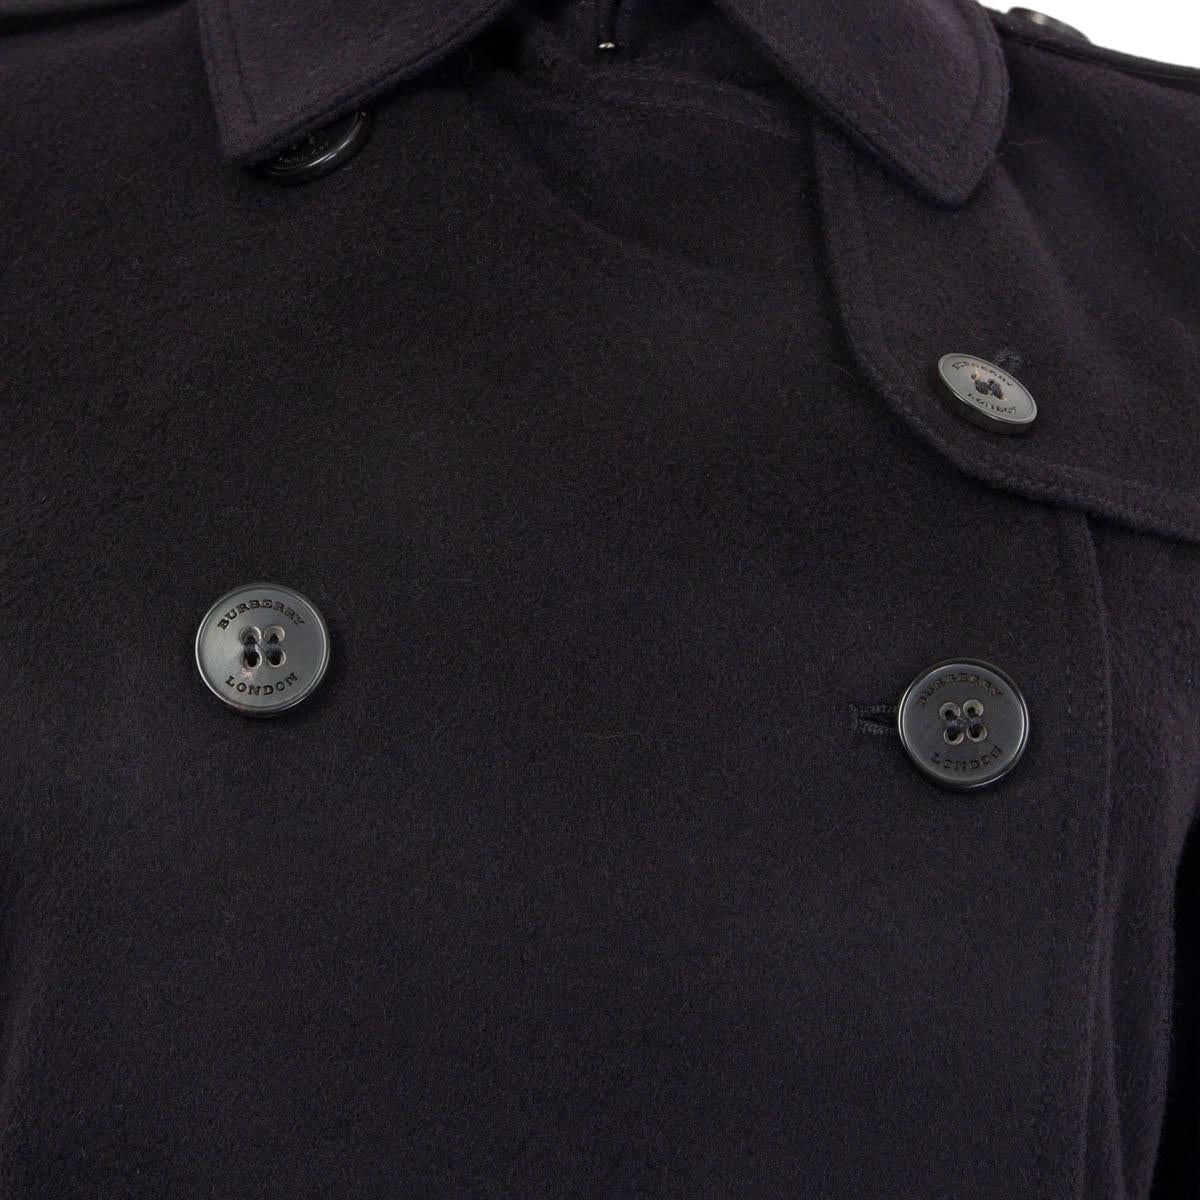 BURBERRY black wool & cashmere KENSINGTON BELTED TRENCH Coat Jacket 8 S 2